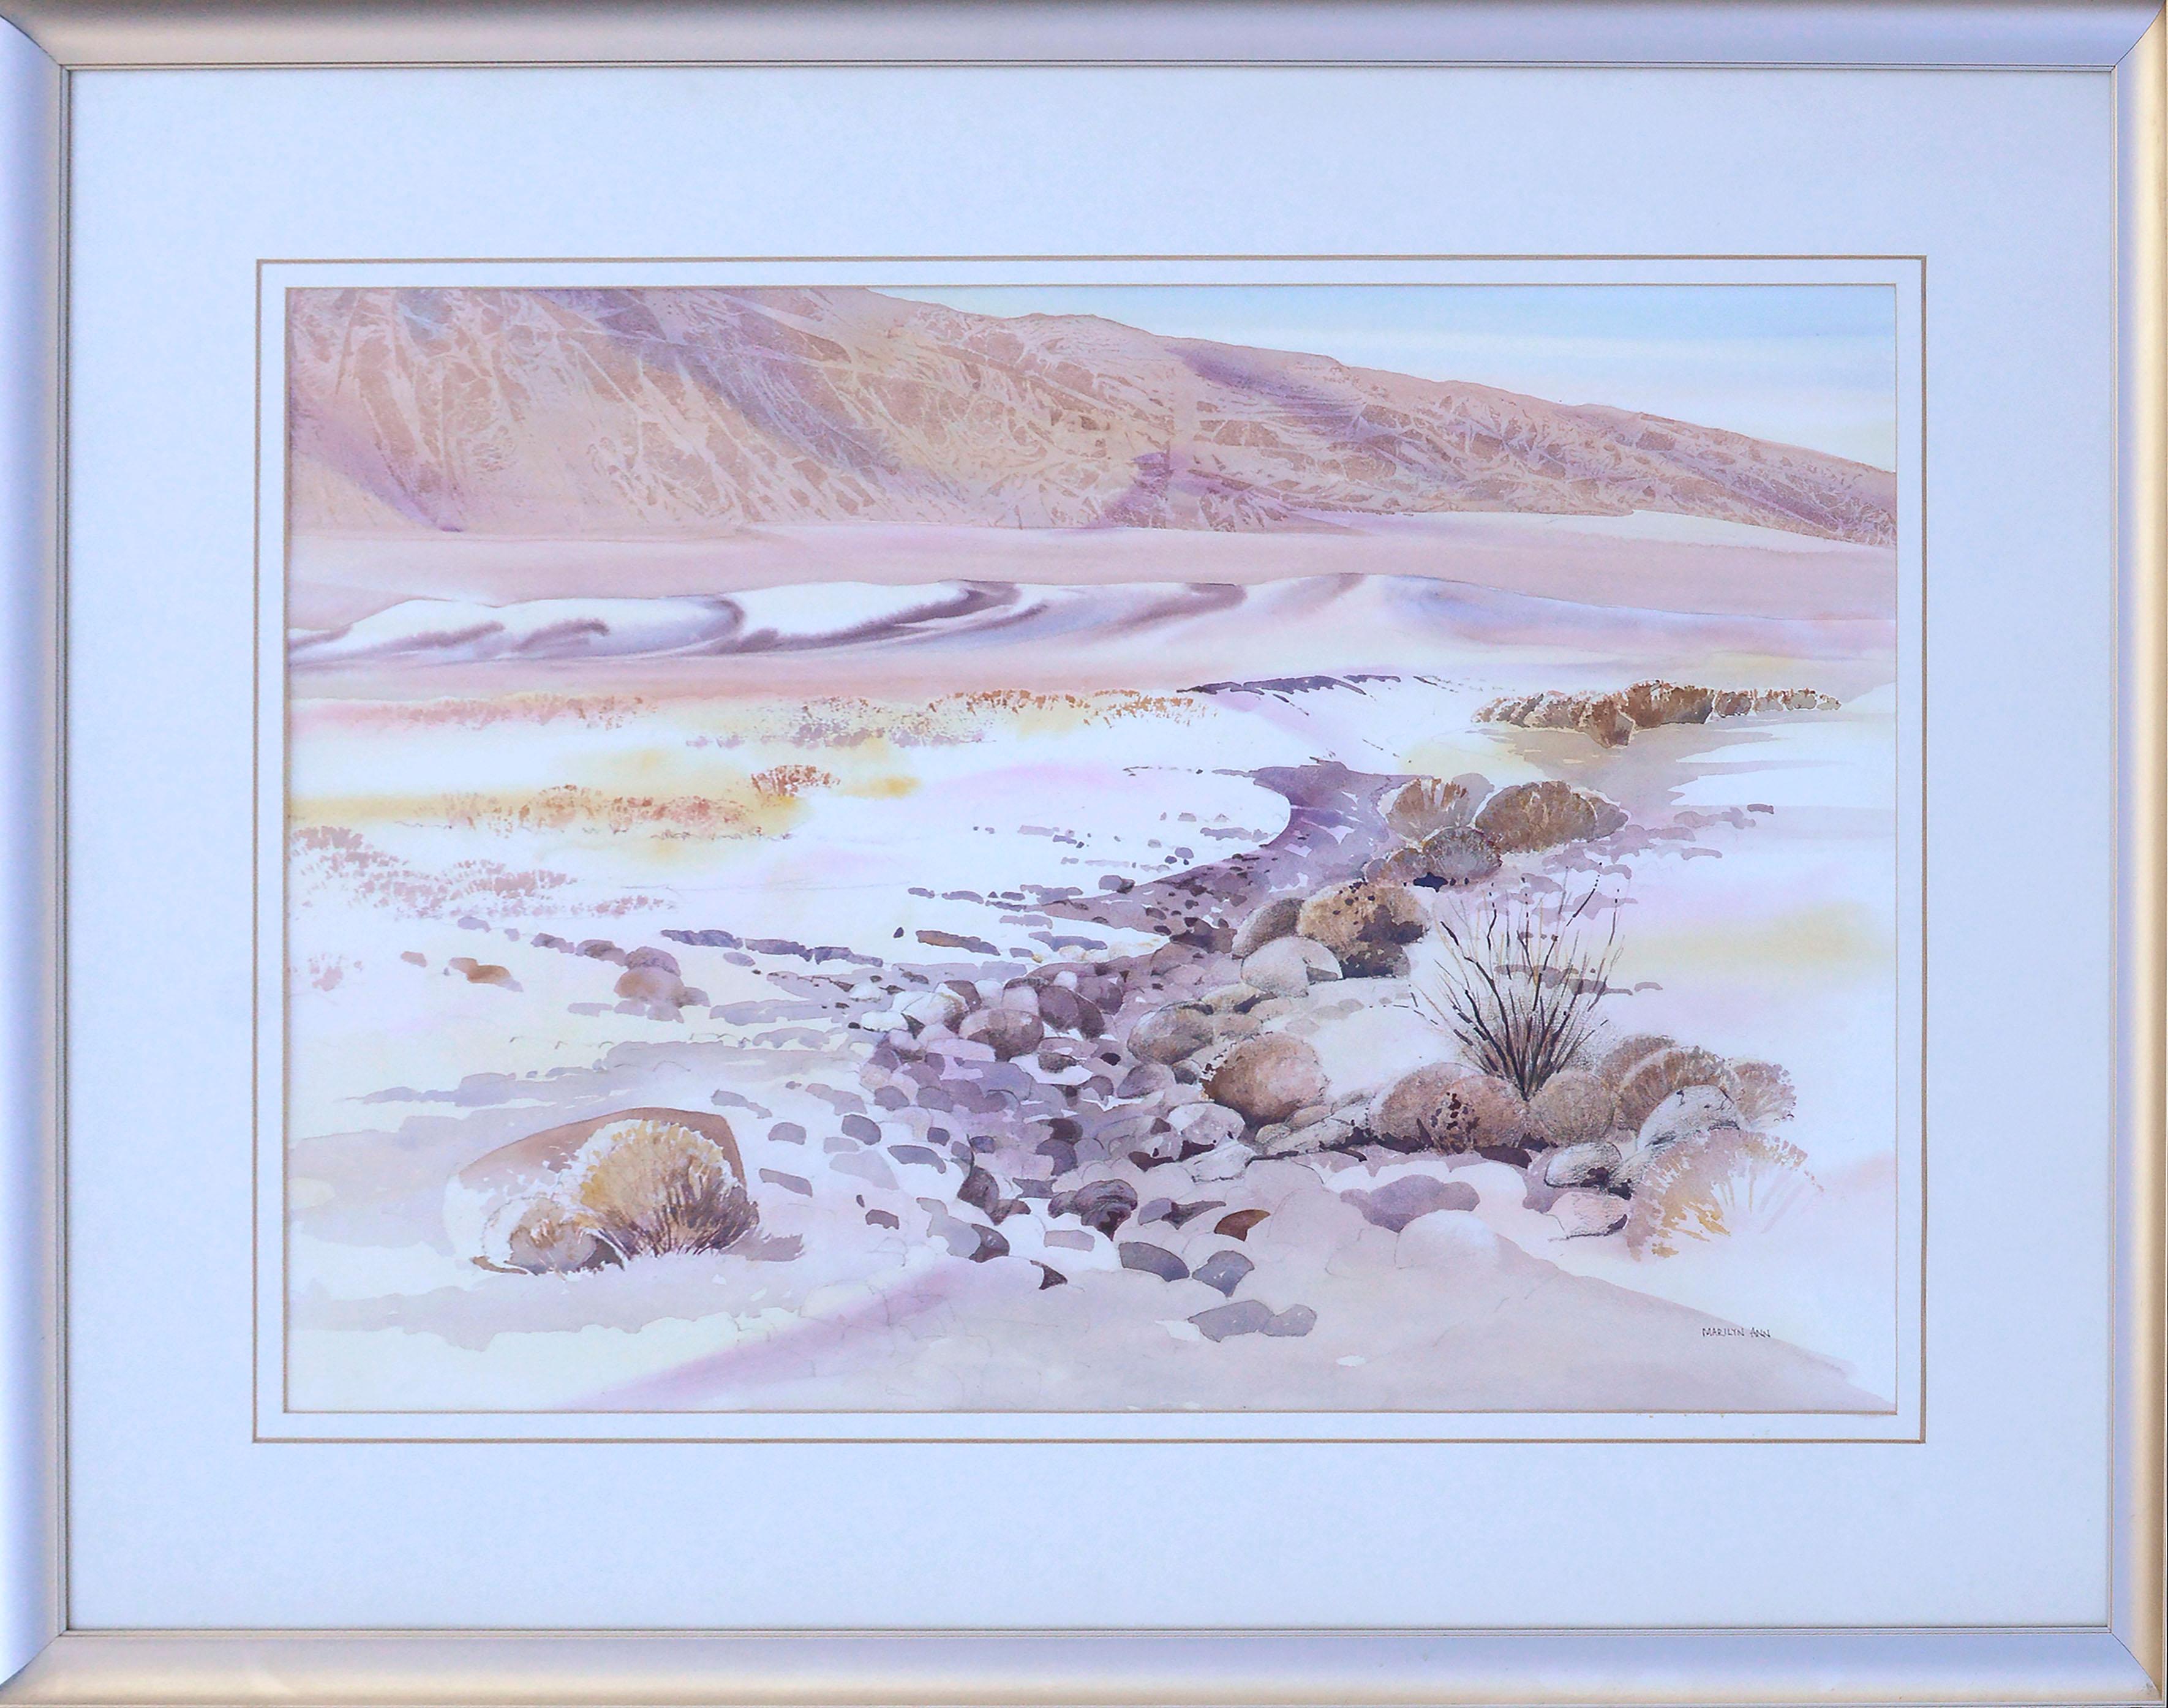 Aquarelle d'un paysage de la vallée de la mort de Rocky Arroyo, Californie